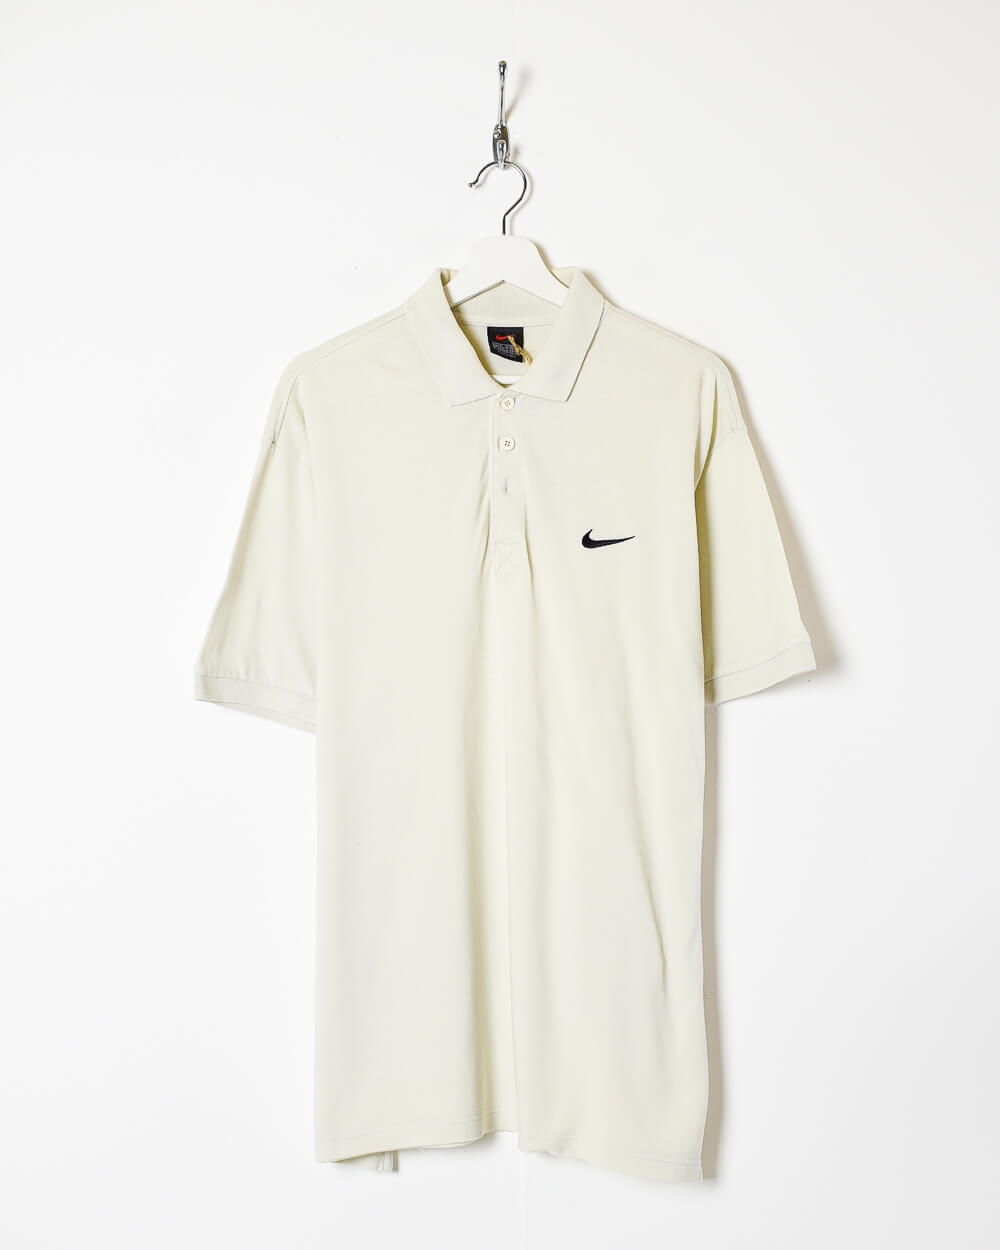 Neutral Nike Polo Shirt - X-Large